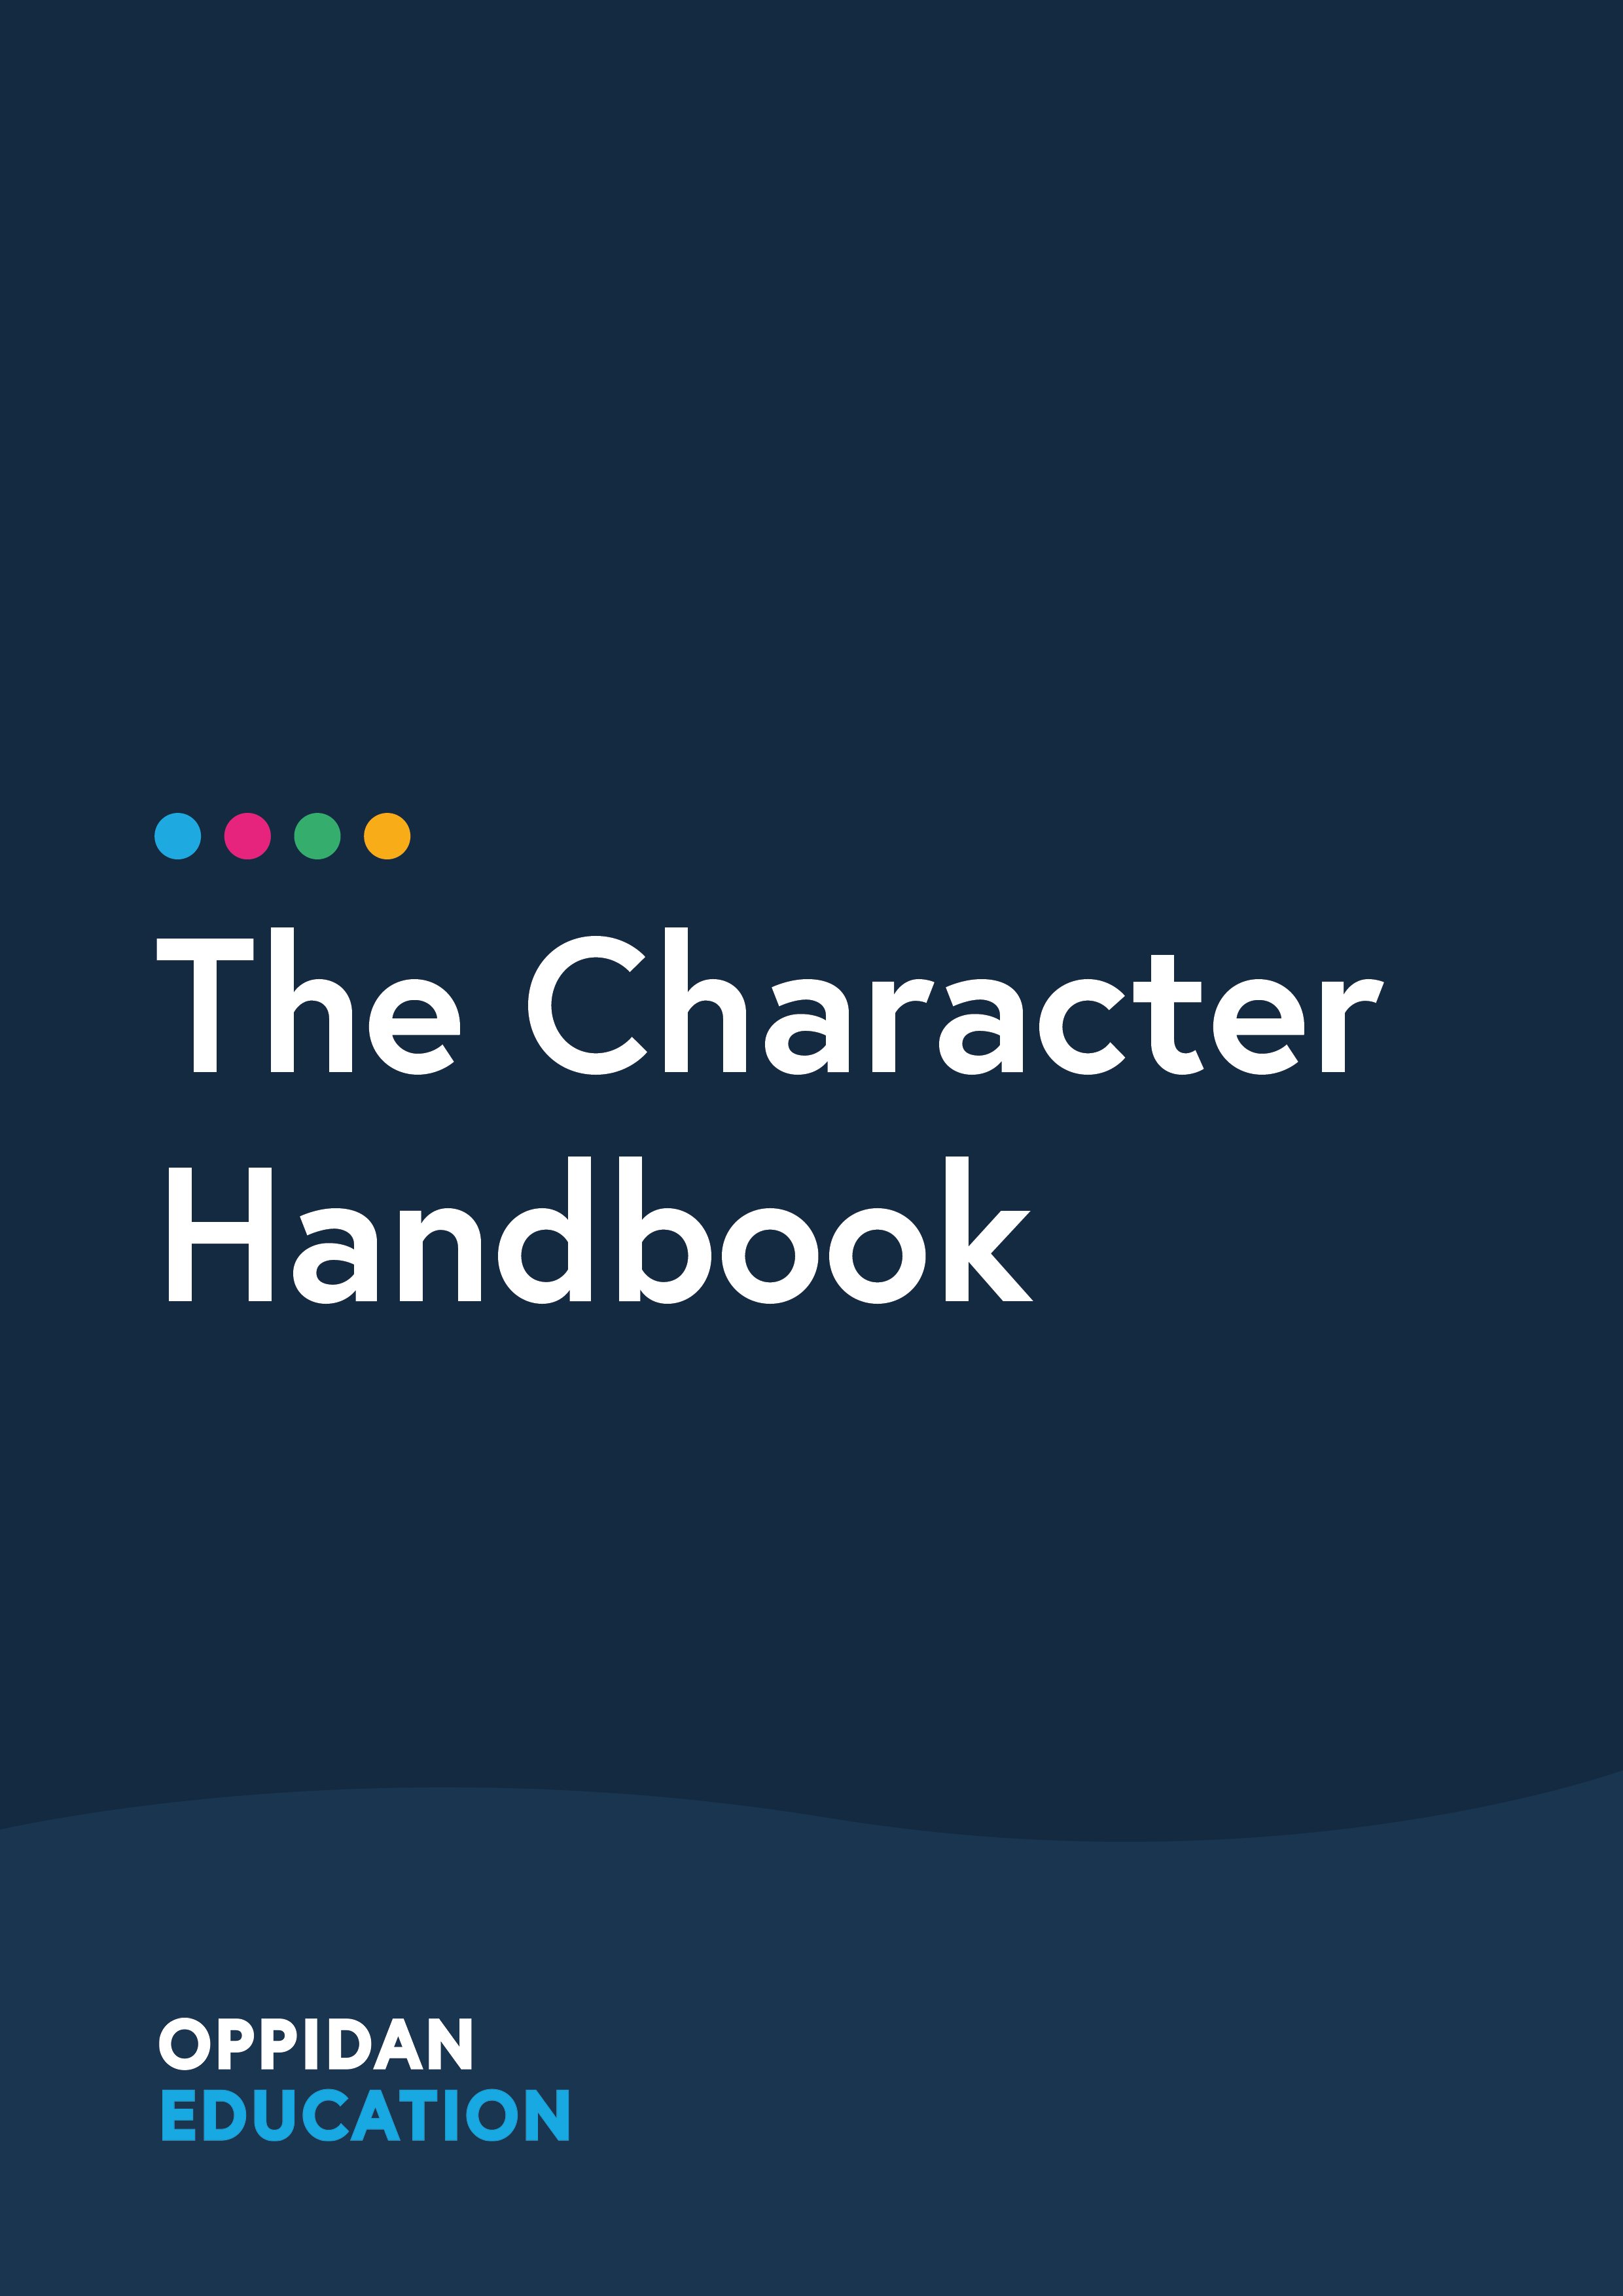 Character Handbook Images.jpg